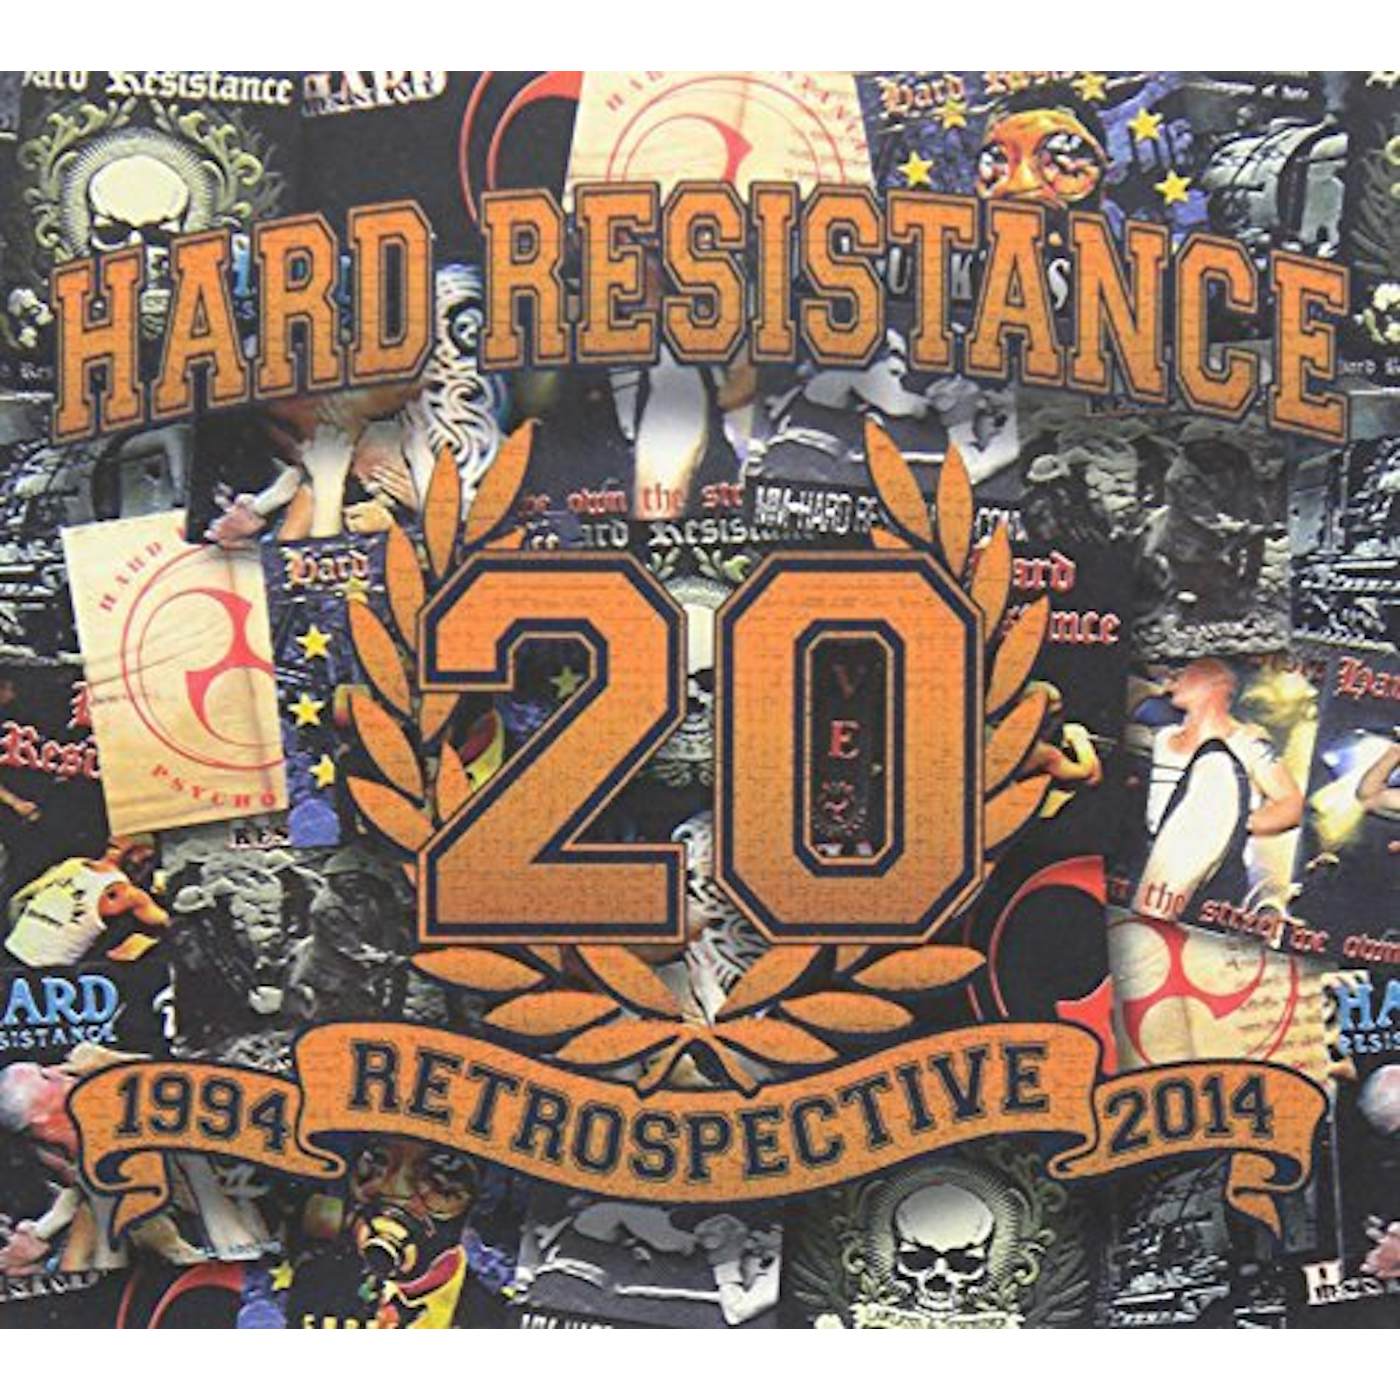 Hard Resistance 1994 RETROSPECTIVE 2014 CD